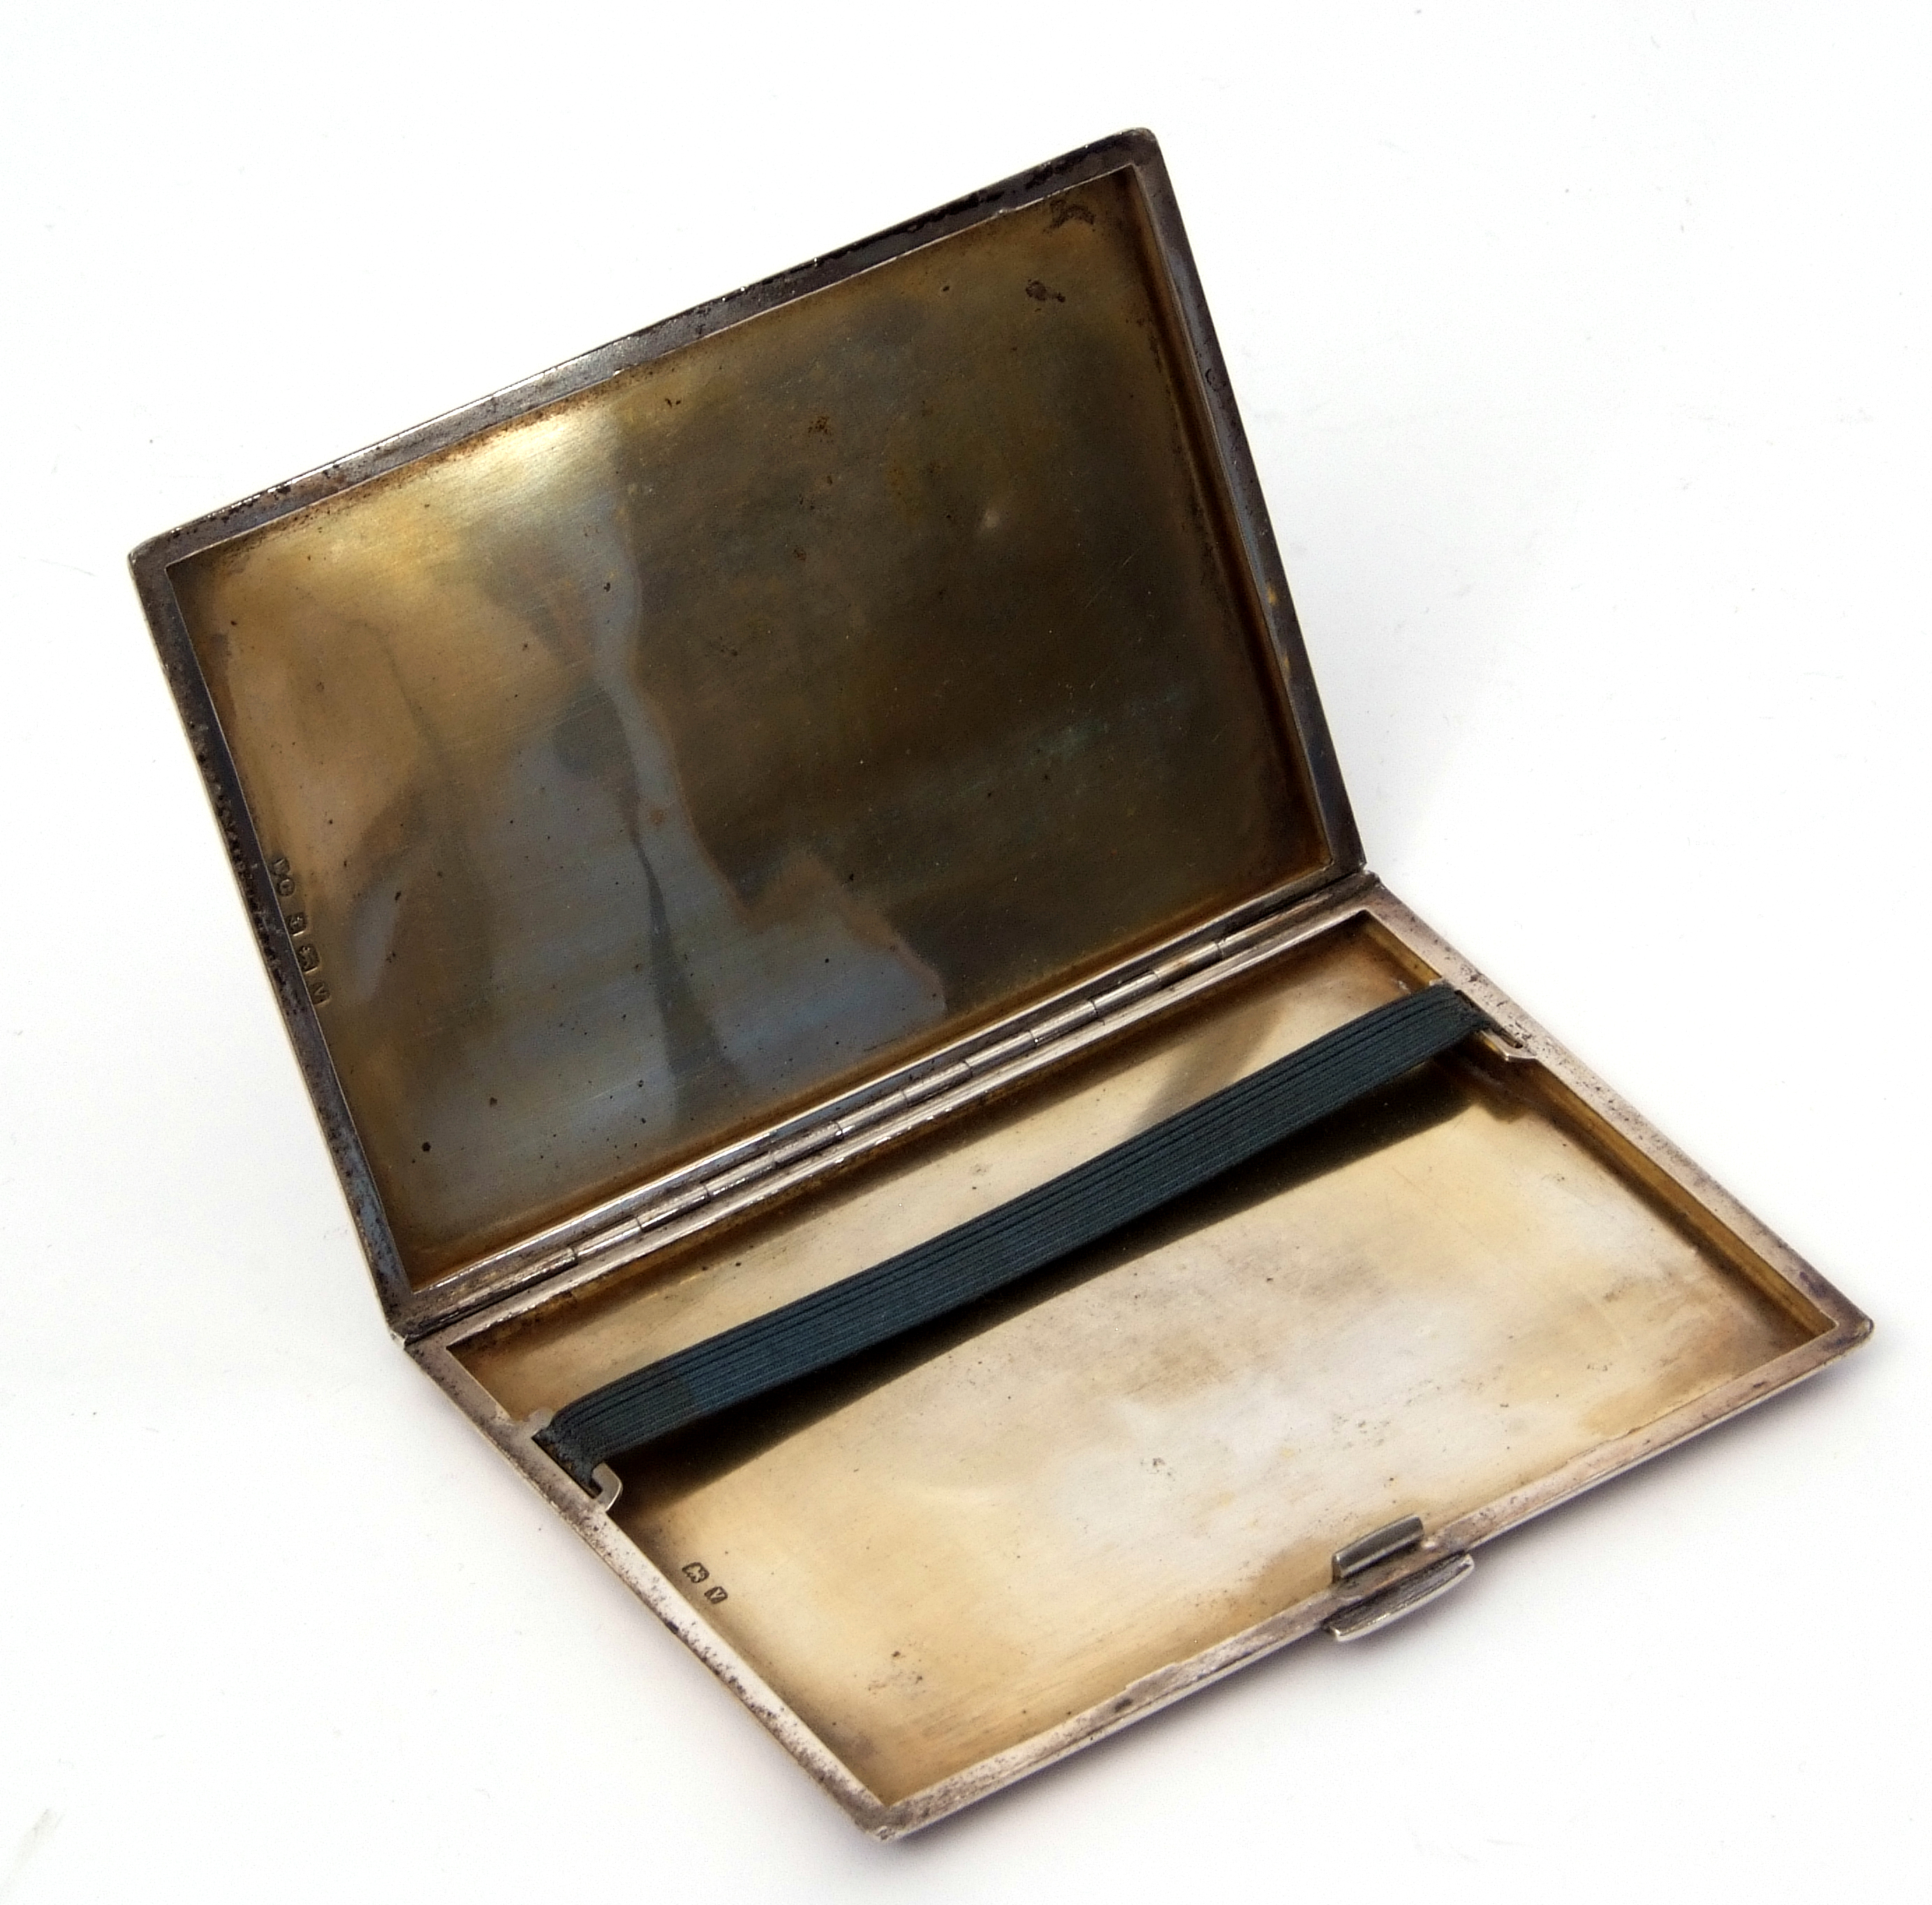 George VI cigarette case of rectangular shape with chamfered edges, banded engine turned decoration, - Image 2 of 2